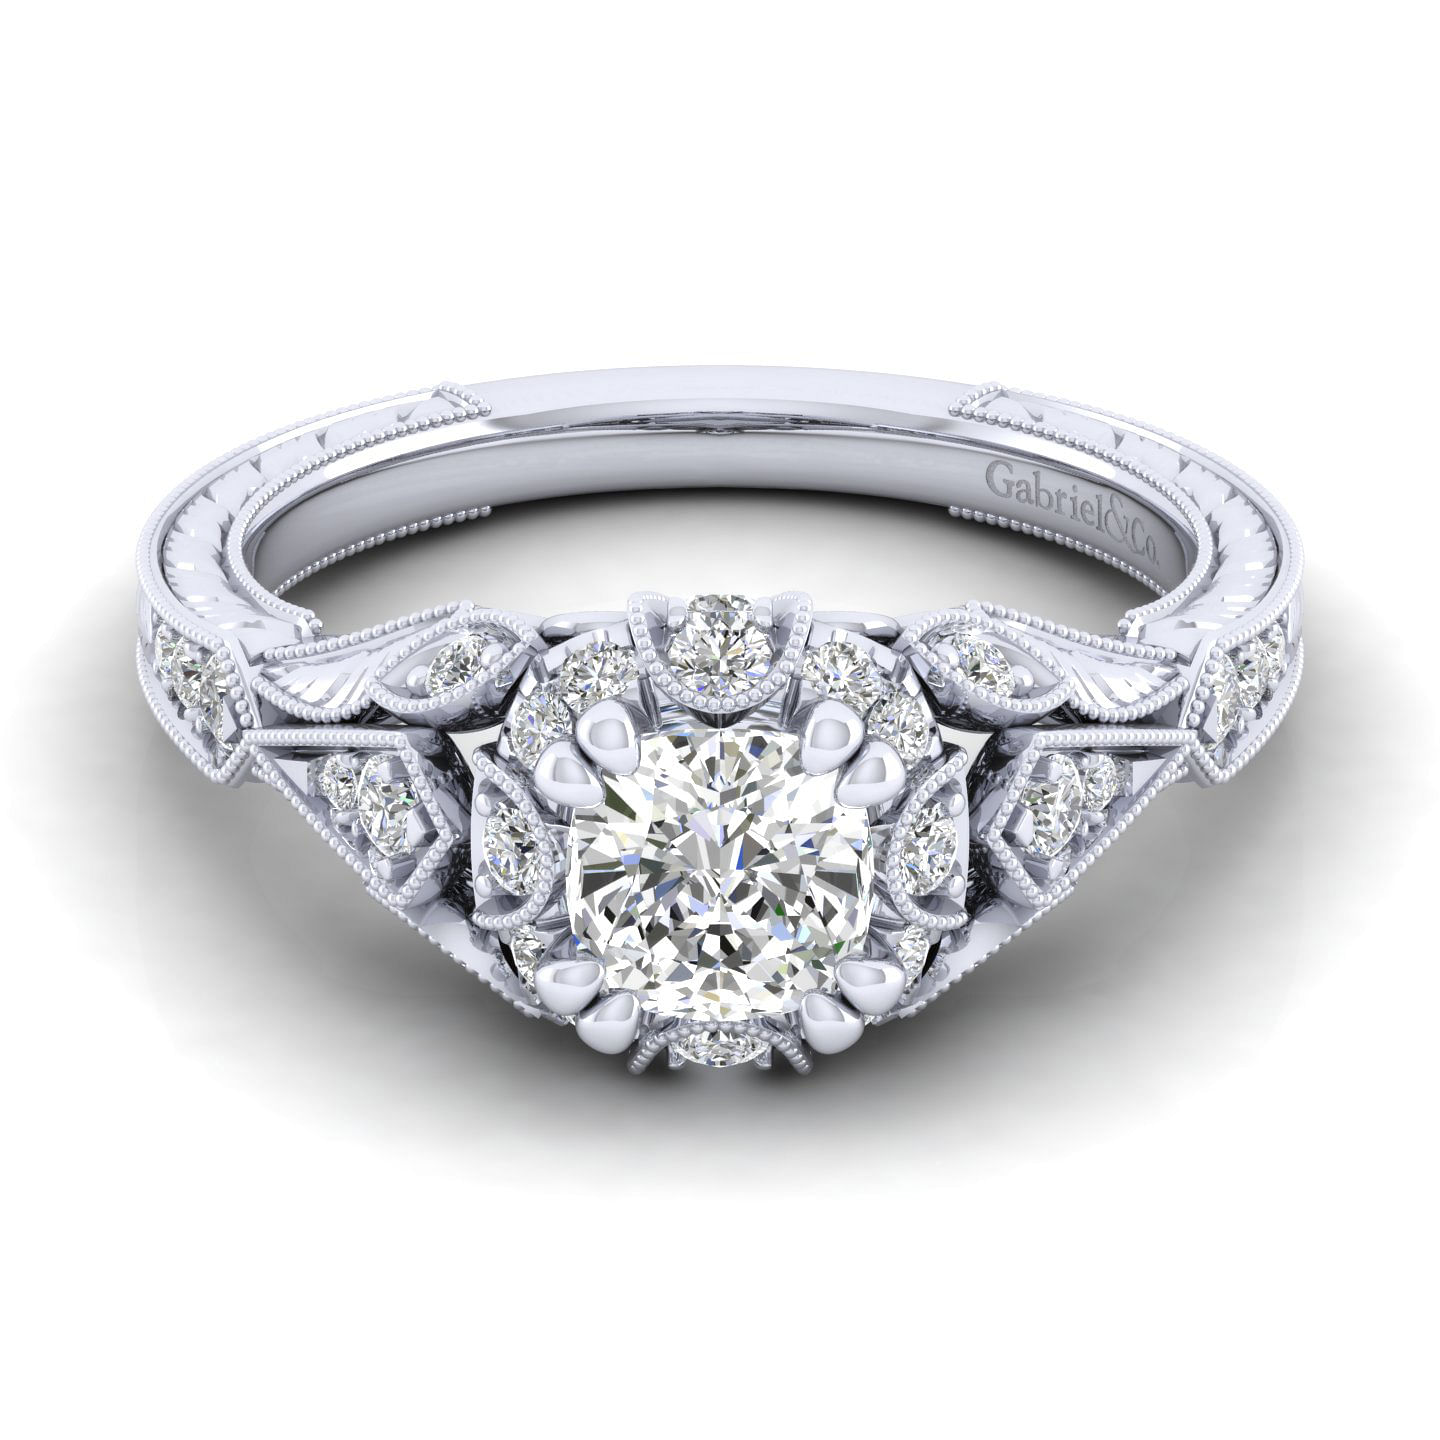 Unique 14K White Gold Vintage Inspired Cushion Cut Diamond Halo Engagement Ring